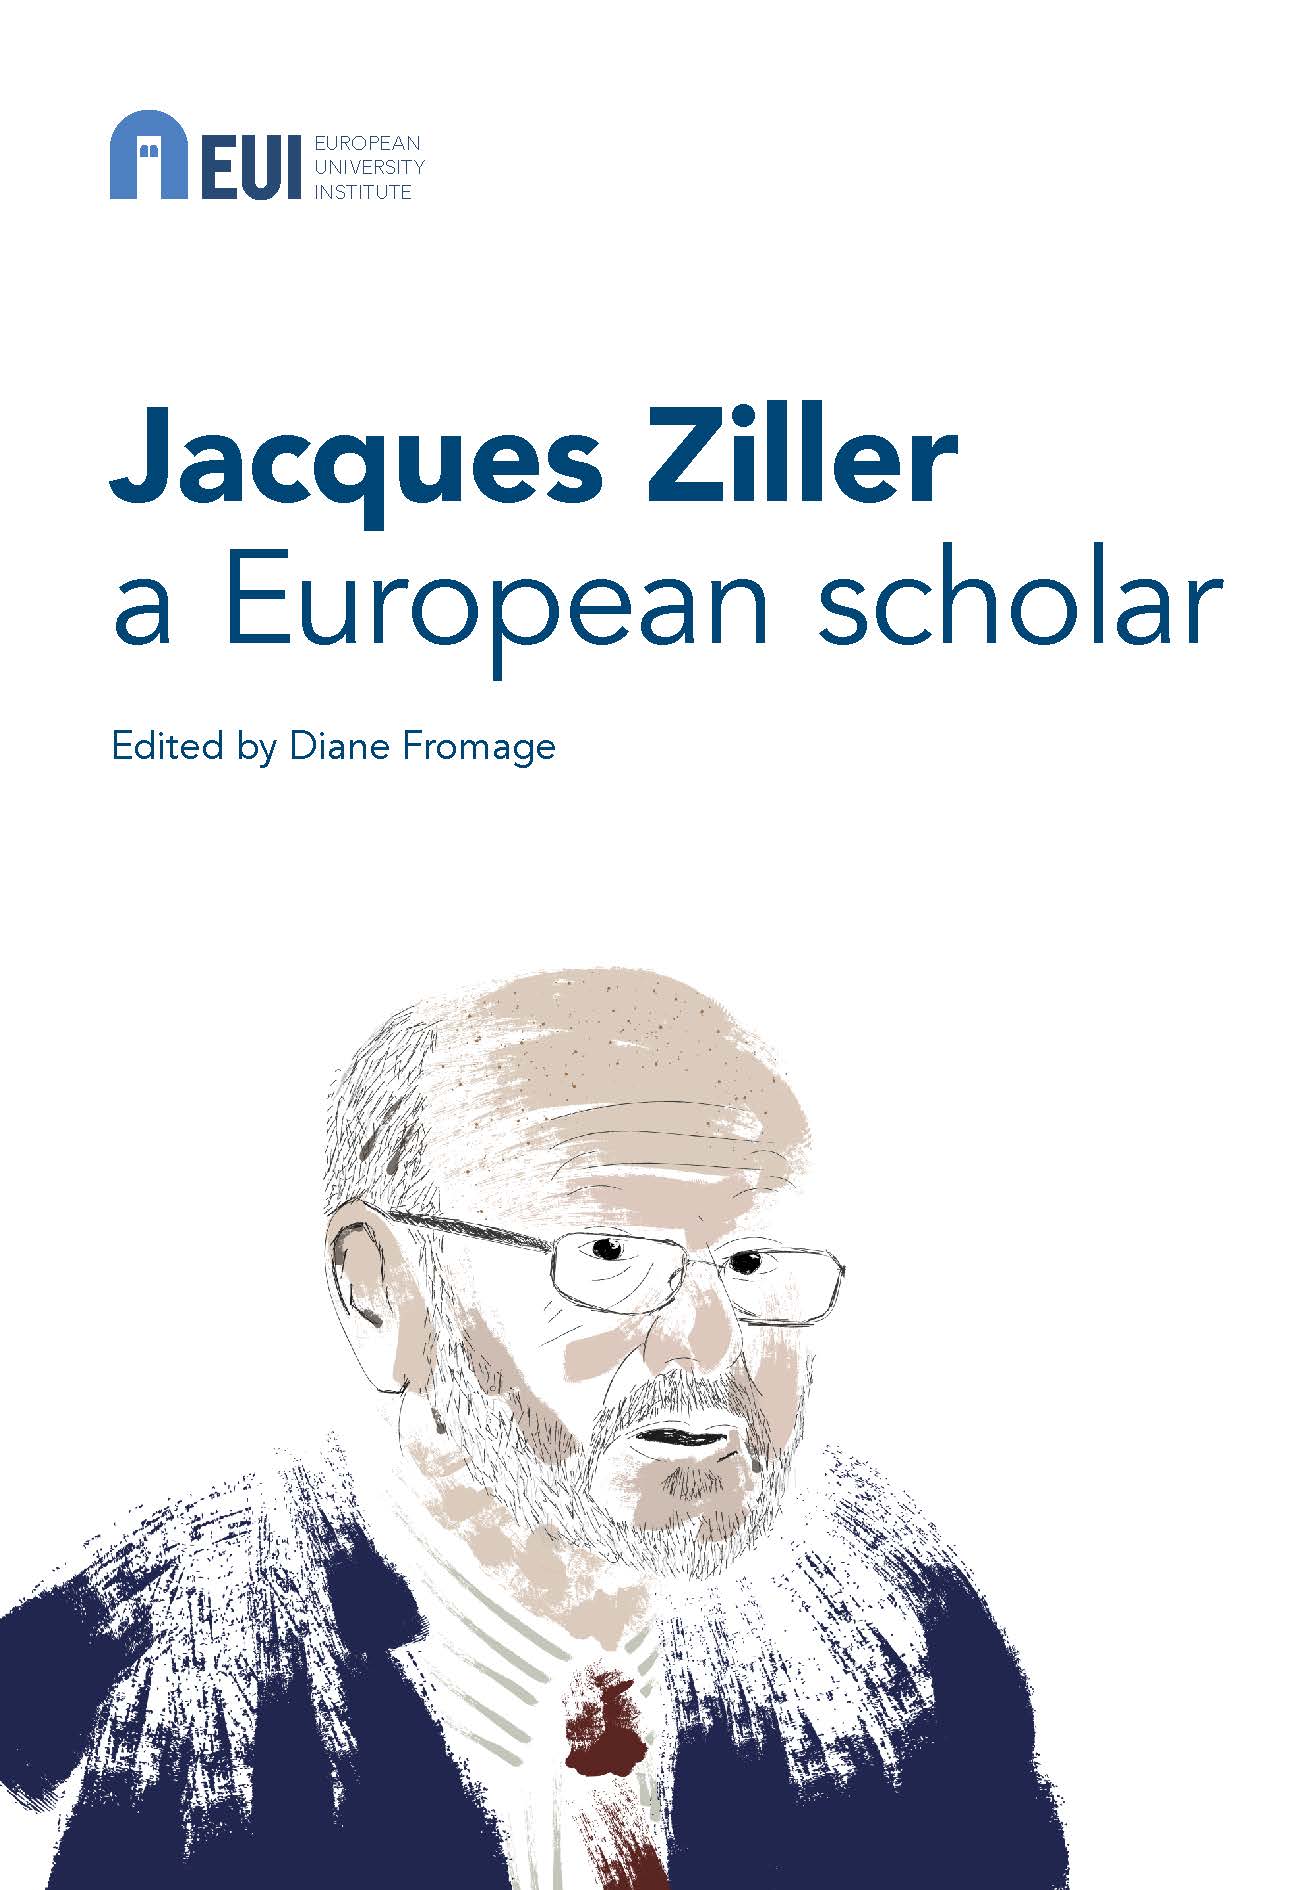 Imagen de portada del libro Jacques Ziller: a European schola